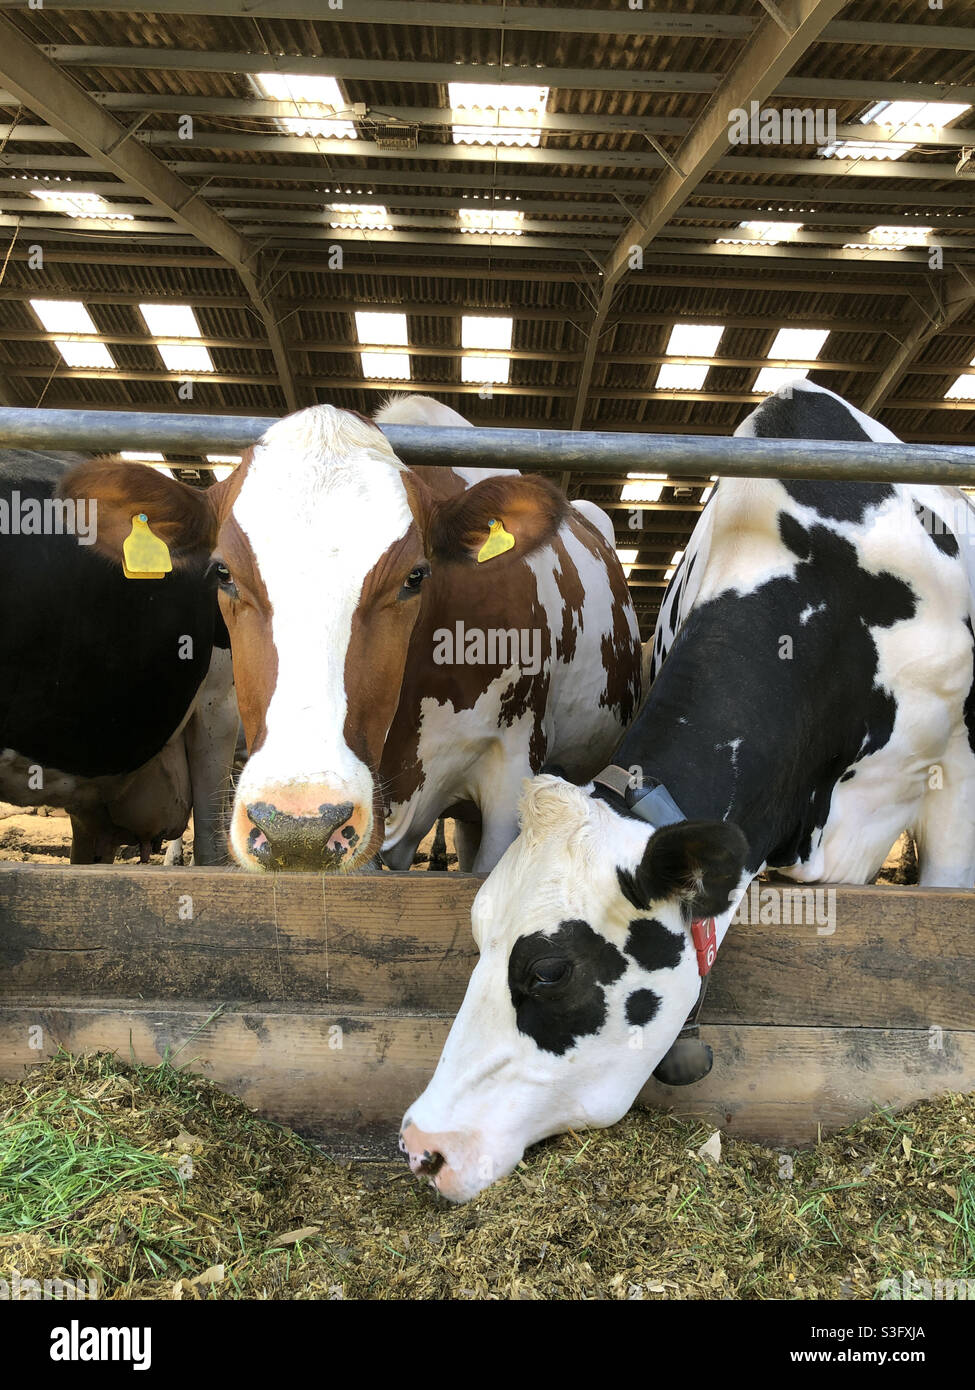 Two dairy cows on a farm, United Kingdom Stock Photo